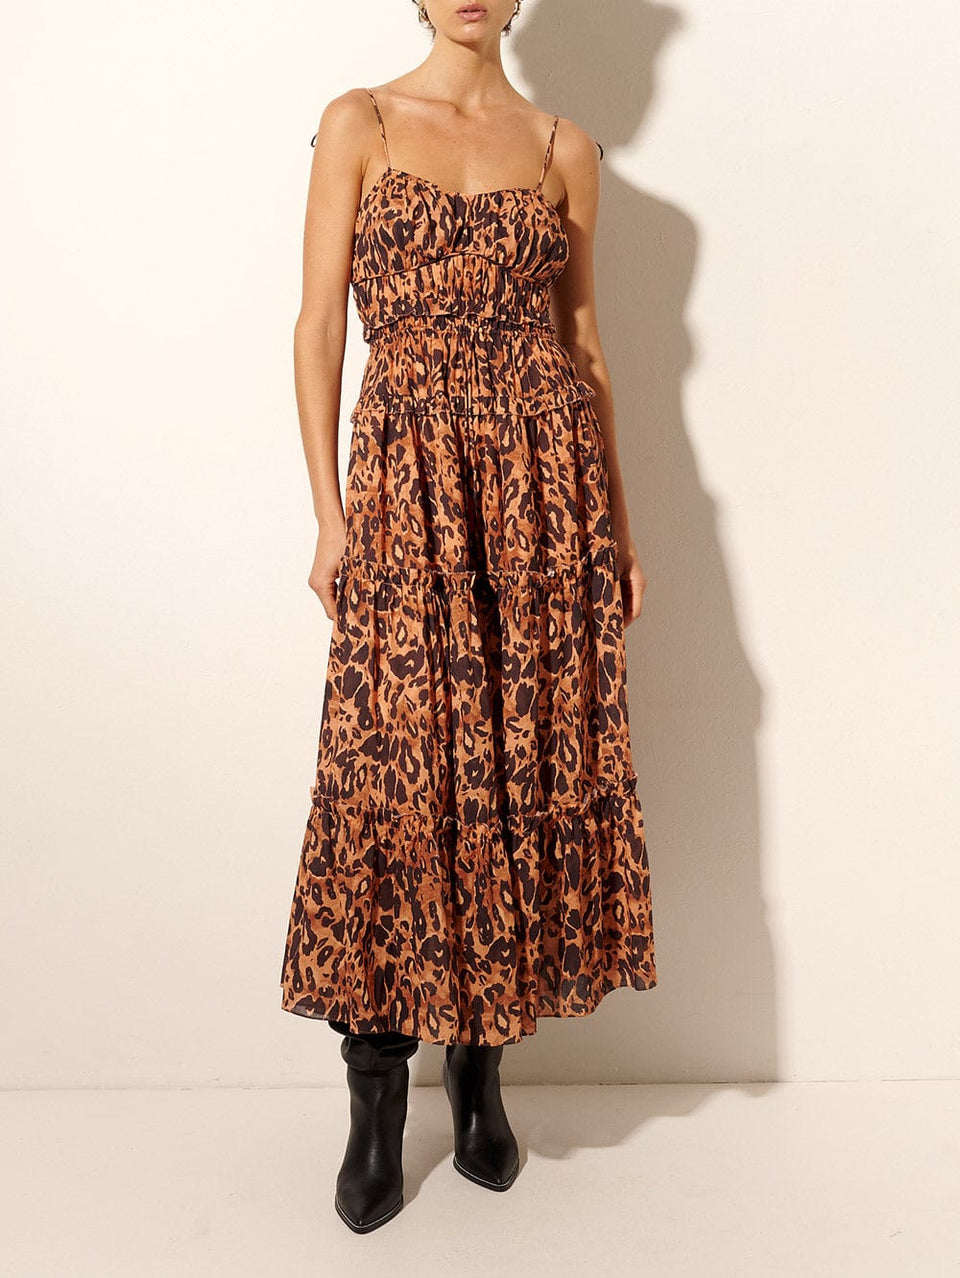 Madison Midi Dress KIVARI | Model wears orange and brown leopard midi dress